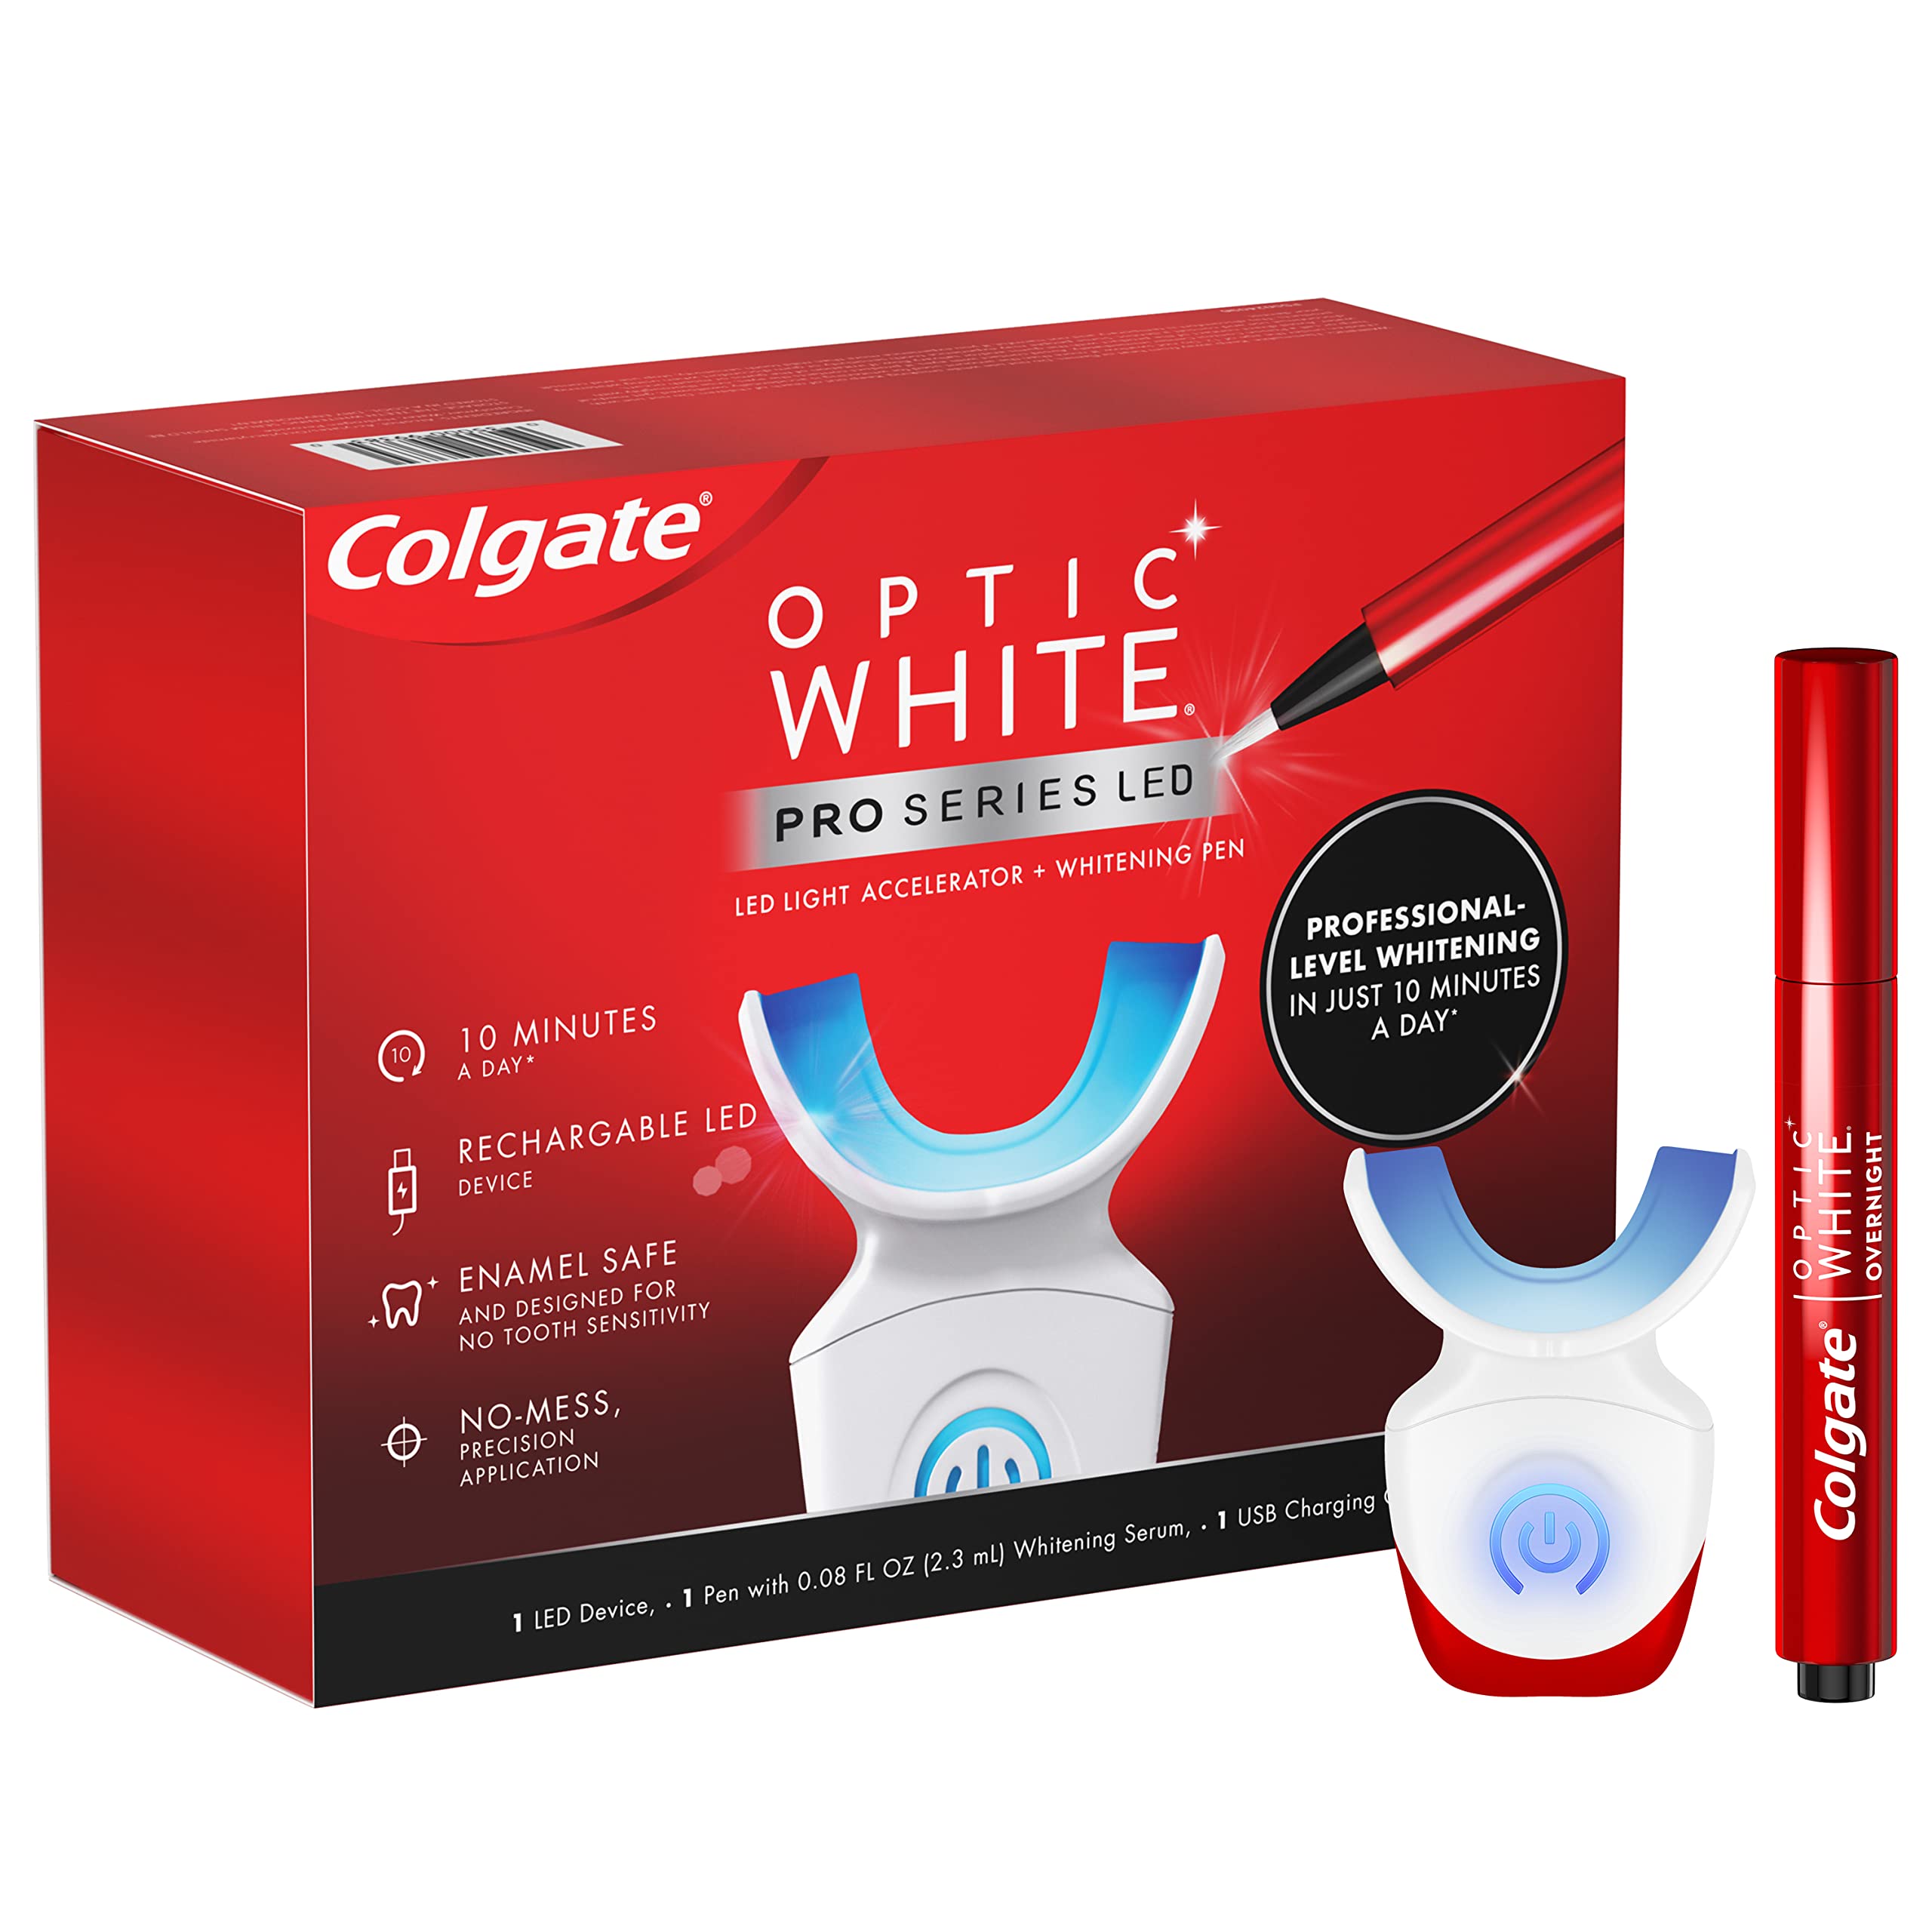 Colgate Optic White Pro Series Teeth Whitening Pen and LED Tray Kit